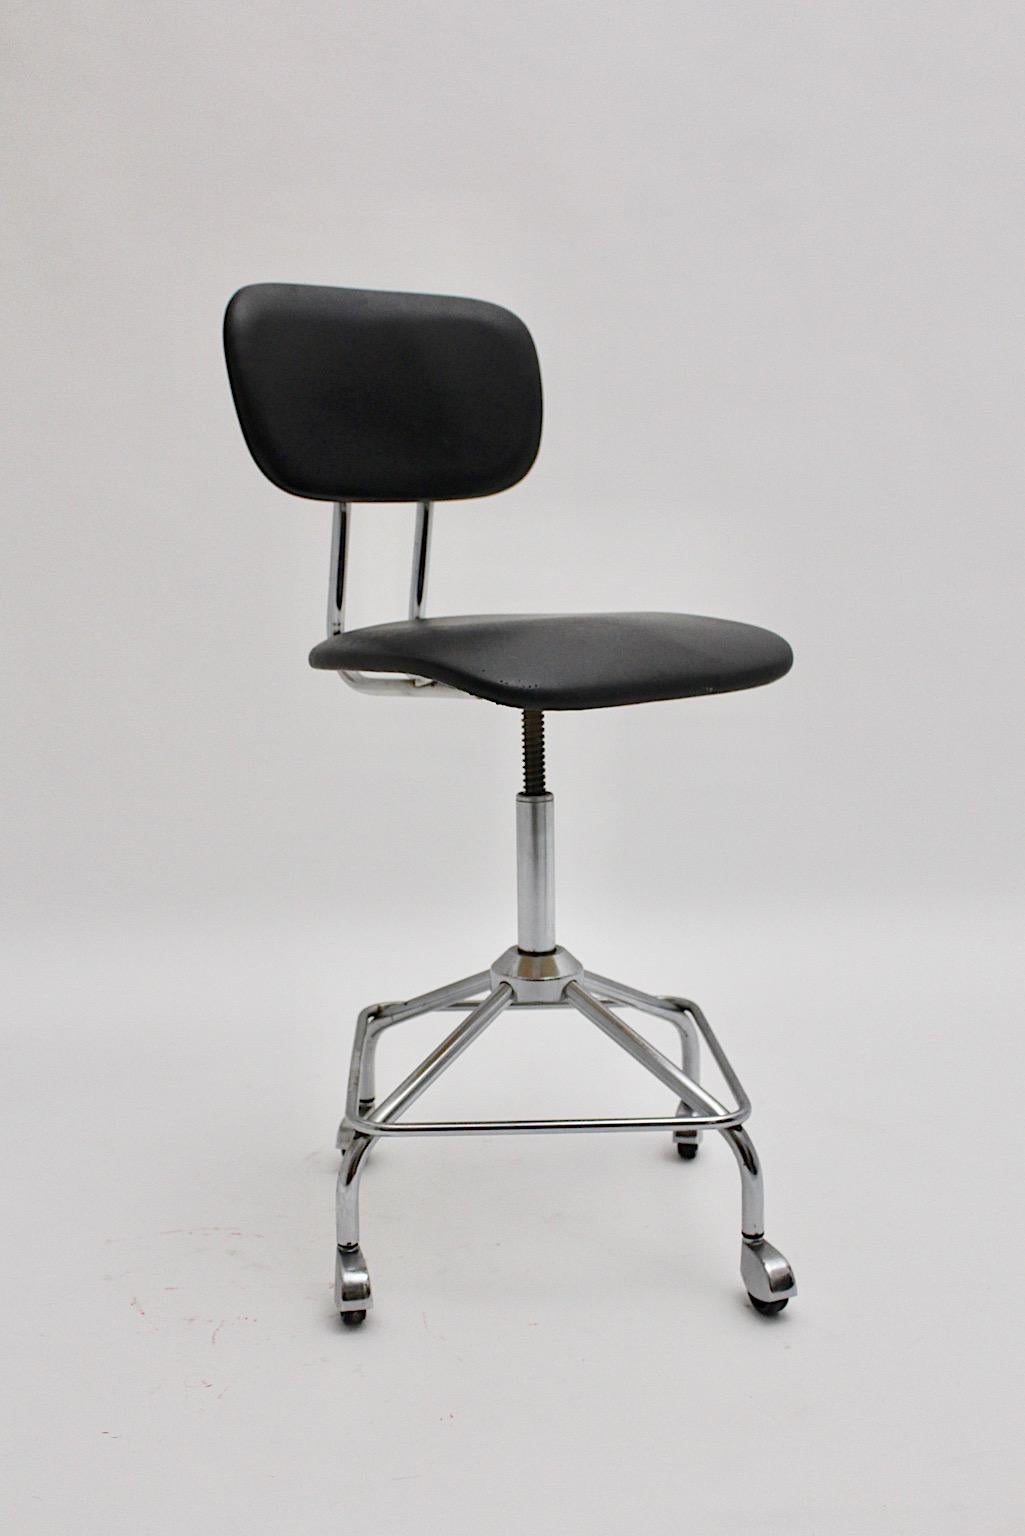 20th Century Mid-Century Modern Vintage Chromed Black Desk Chair Office Chair, 1950s, Germany